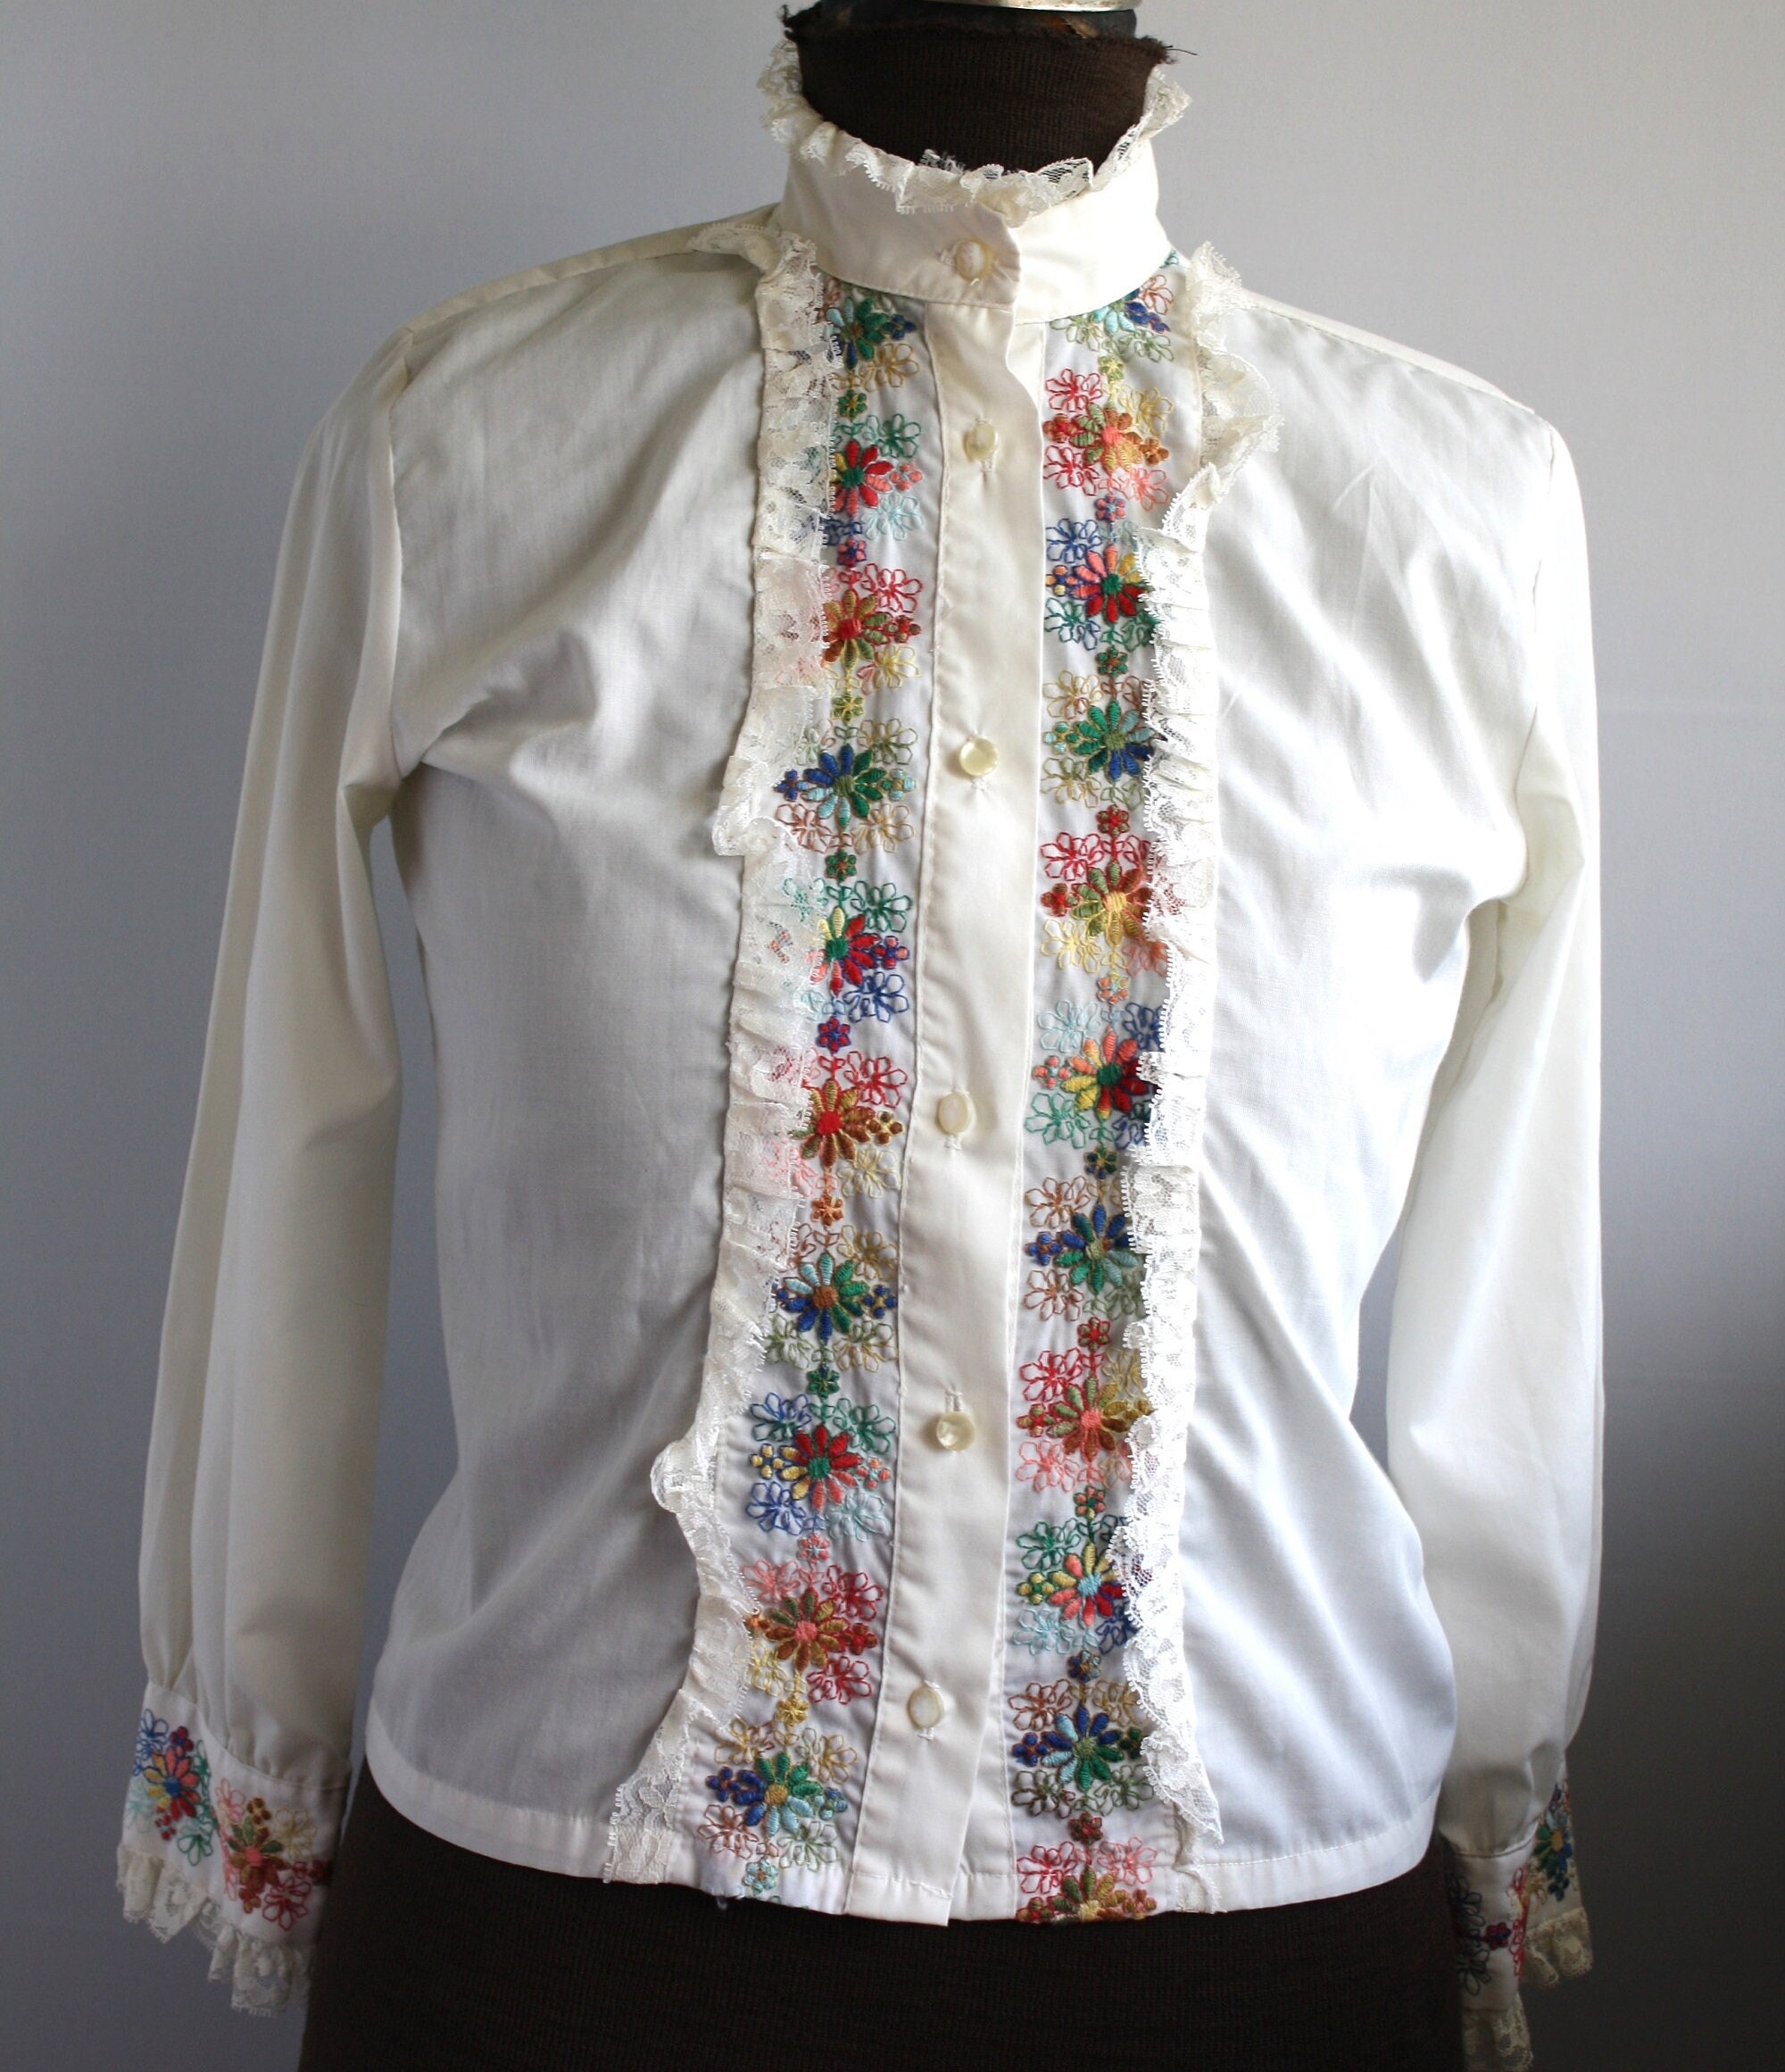 Collar blouse - Best collar blouses on the high street